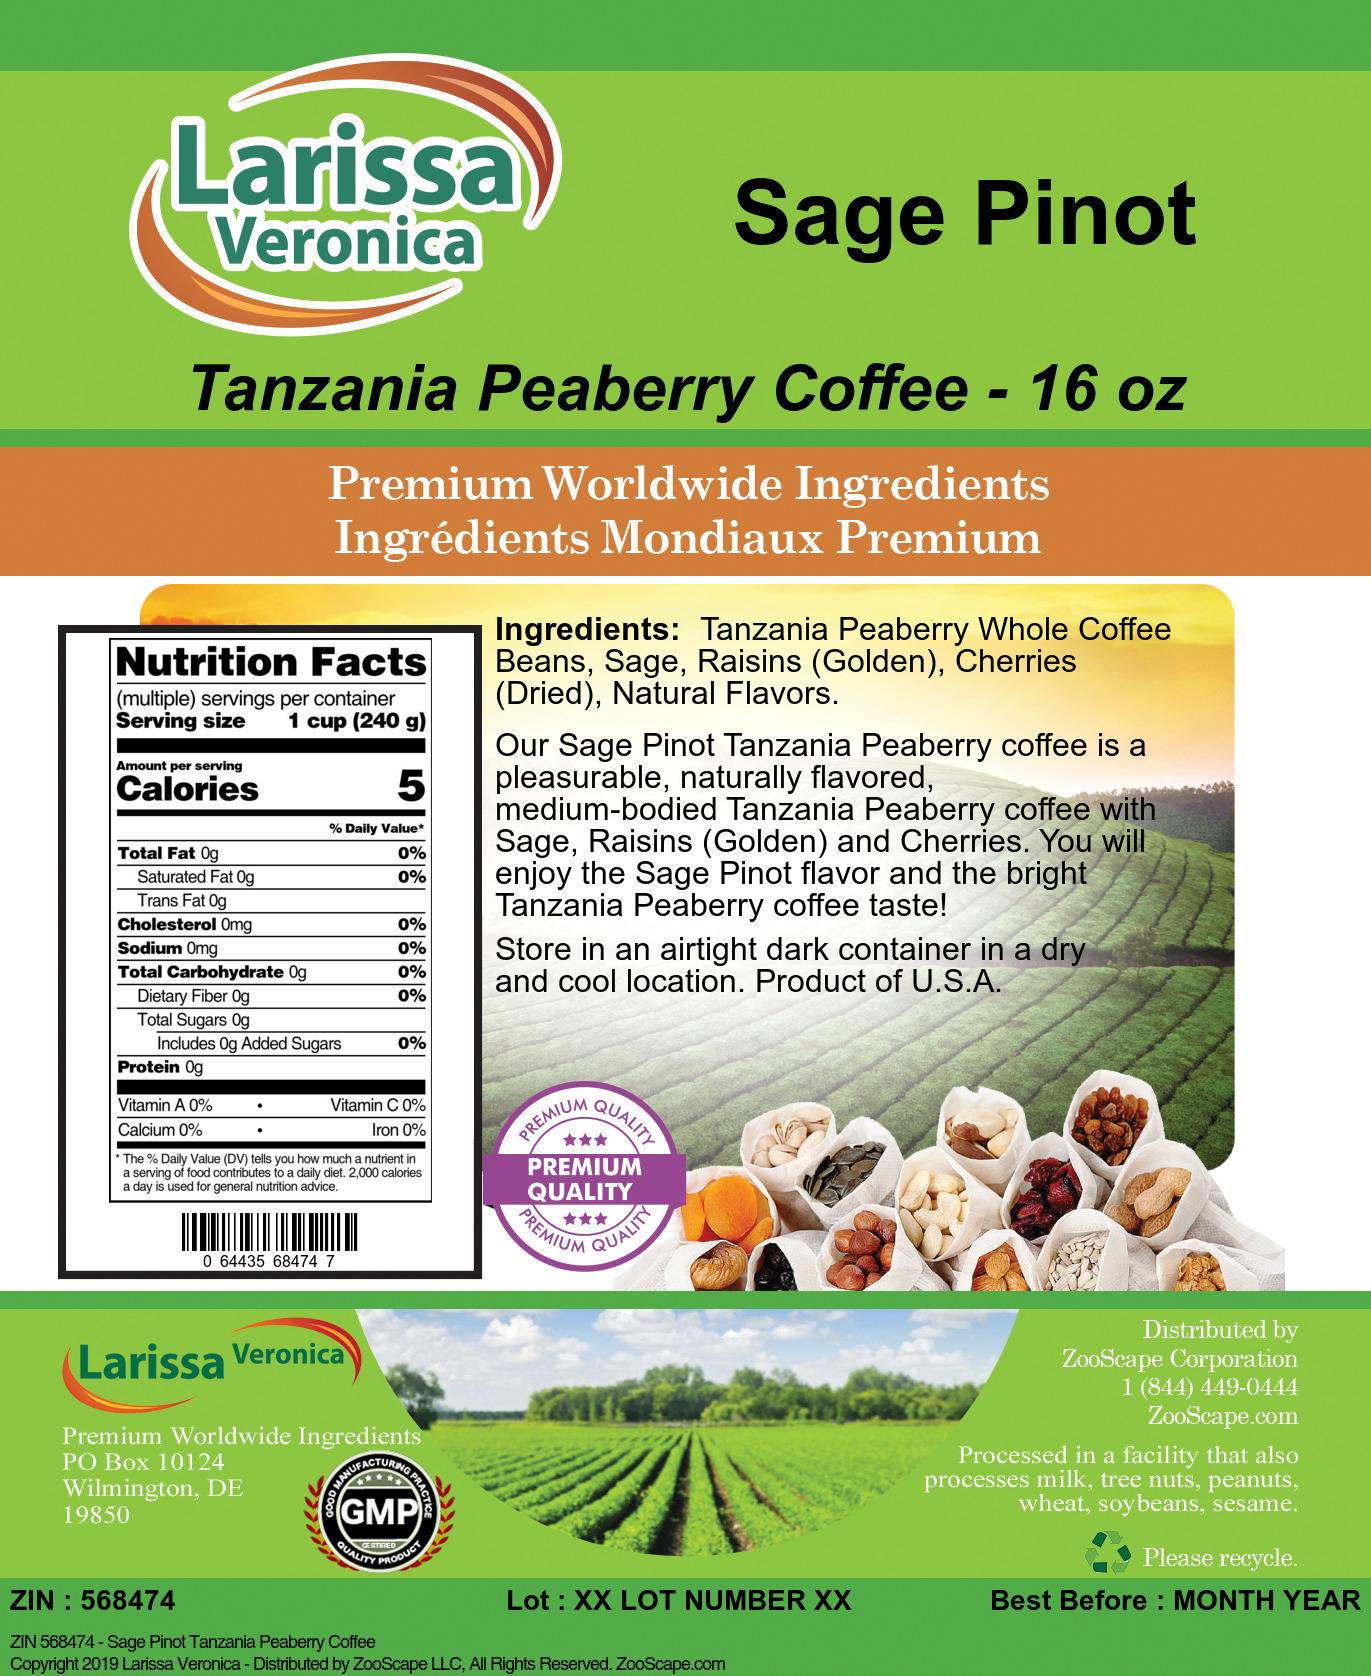 Sage Pinot Tanzania Peaberry Coffee - Label